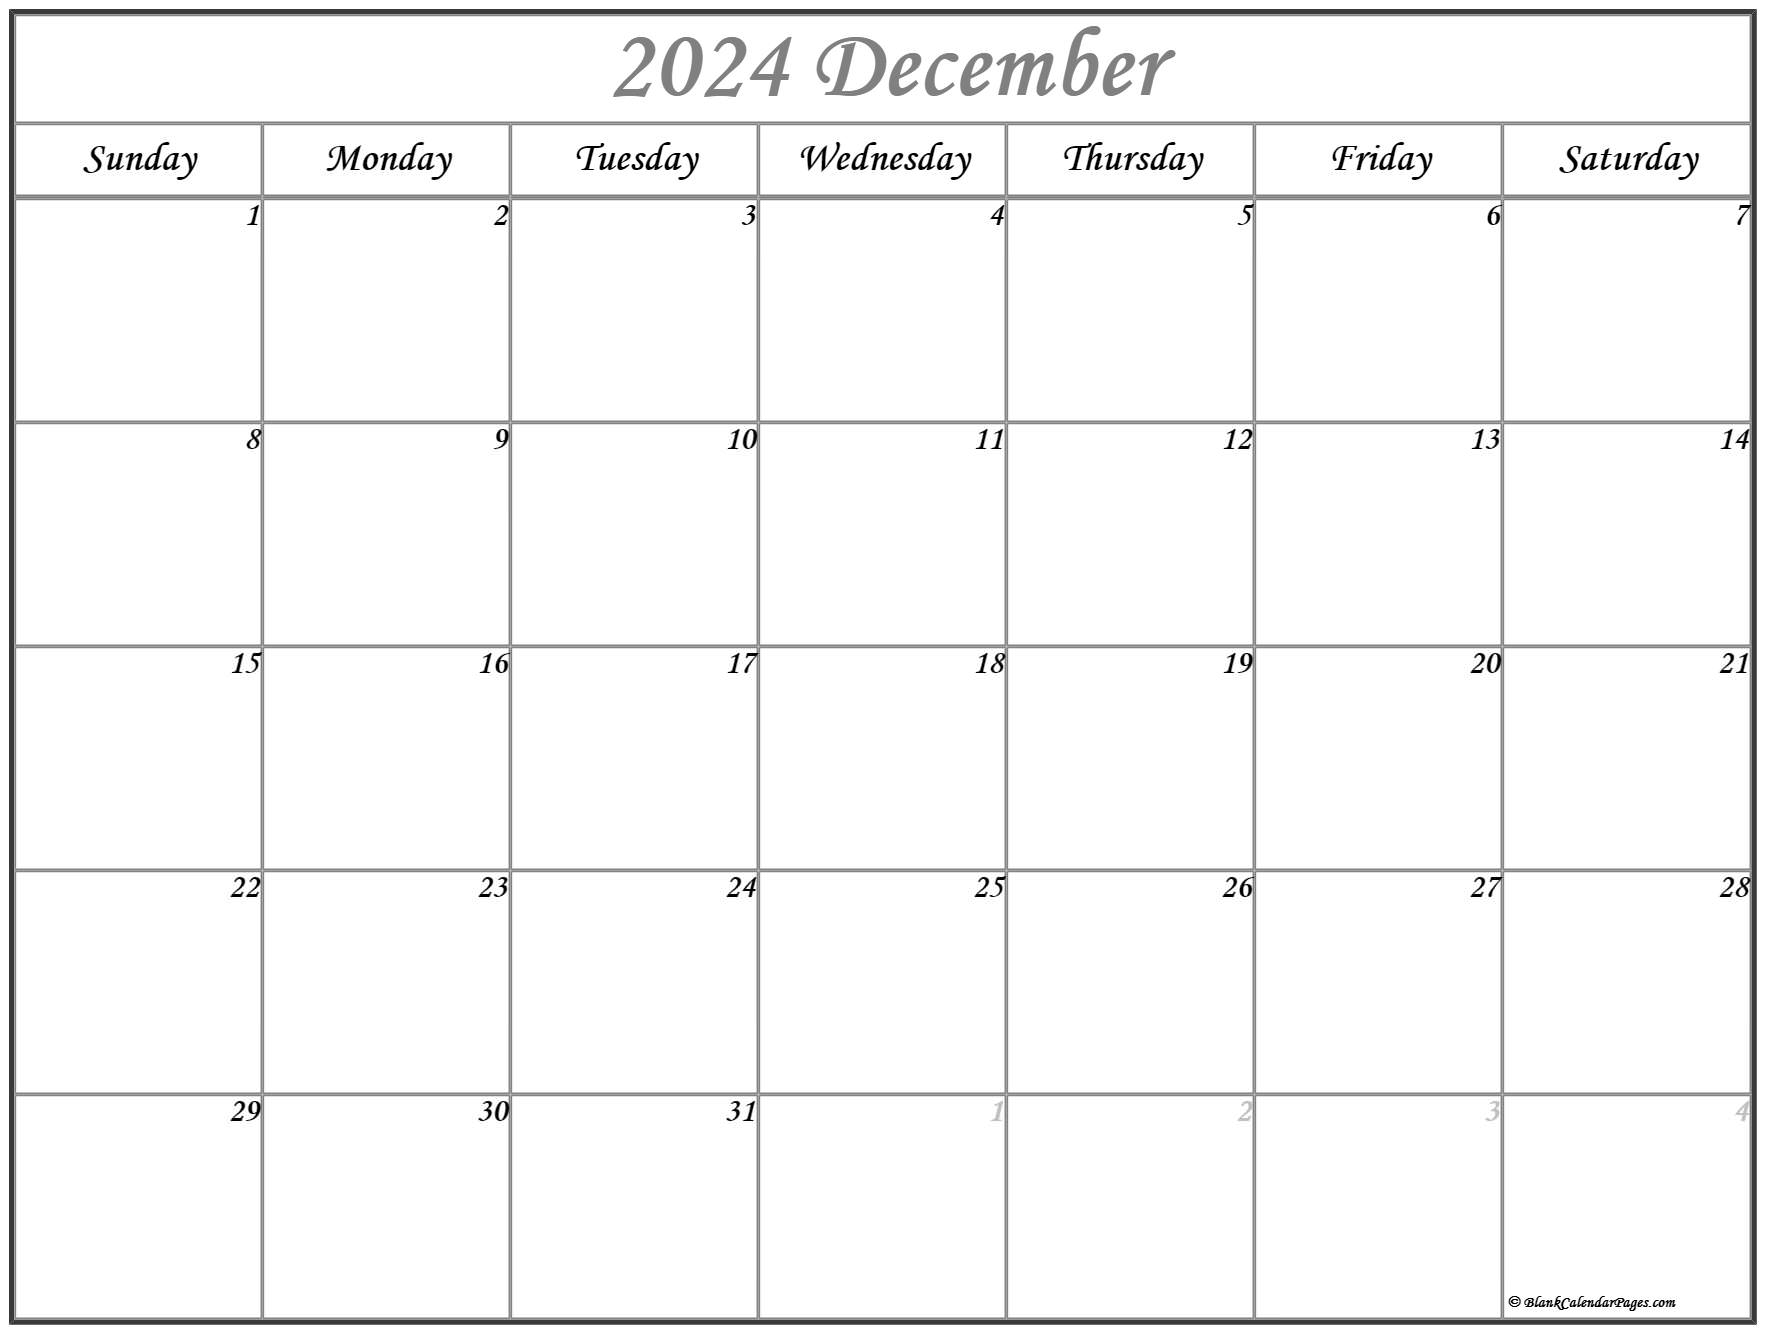 december-2022-calendar-free-printable-calendar